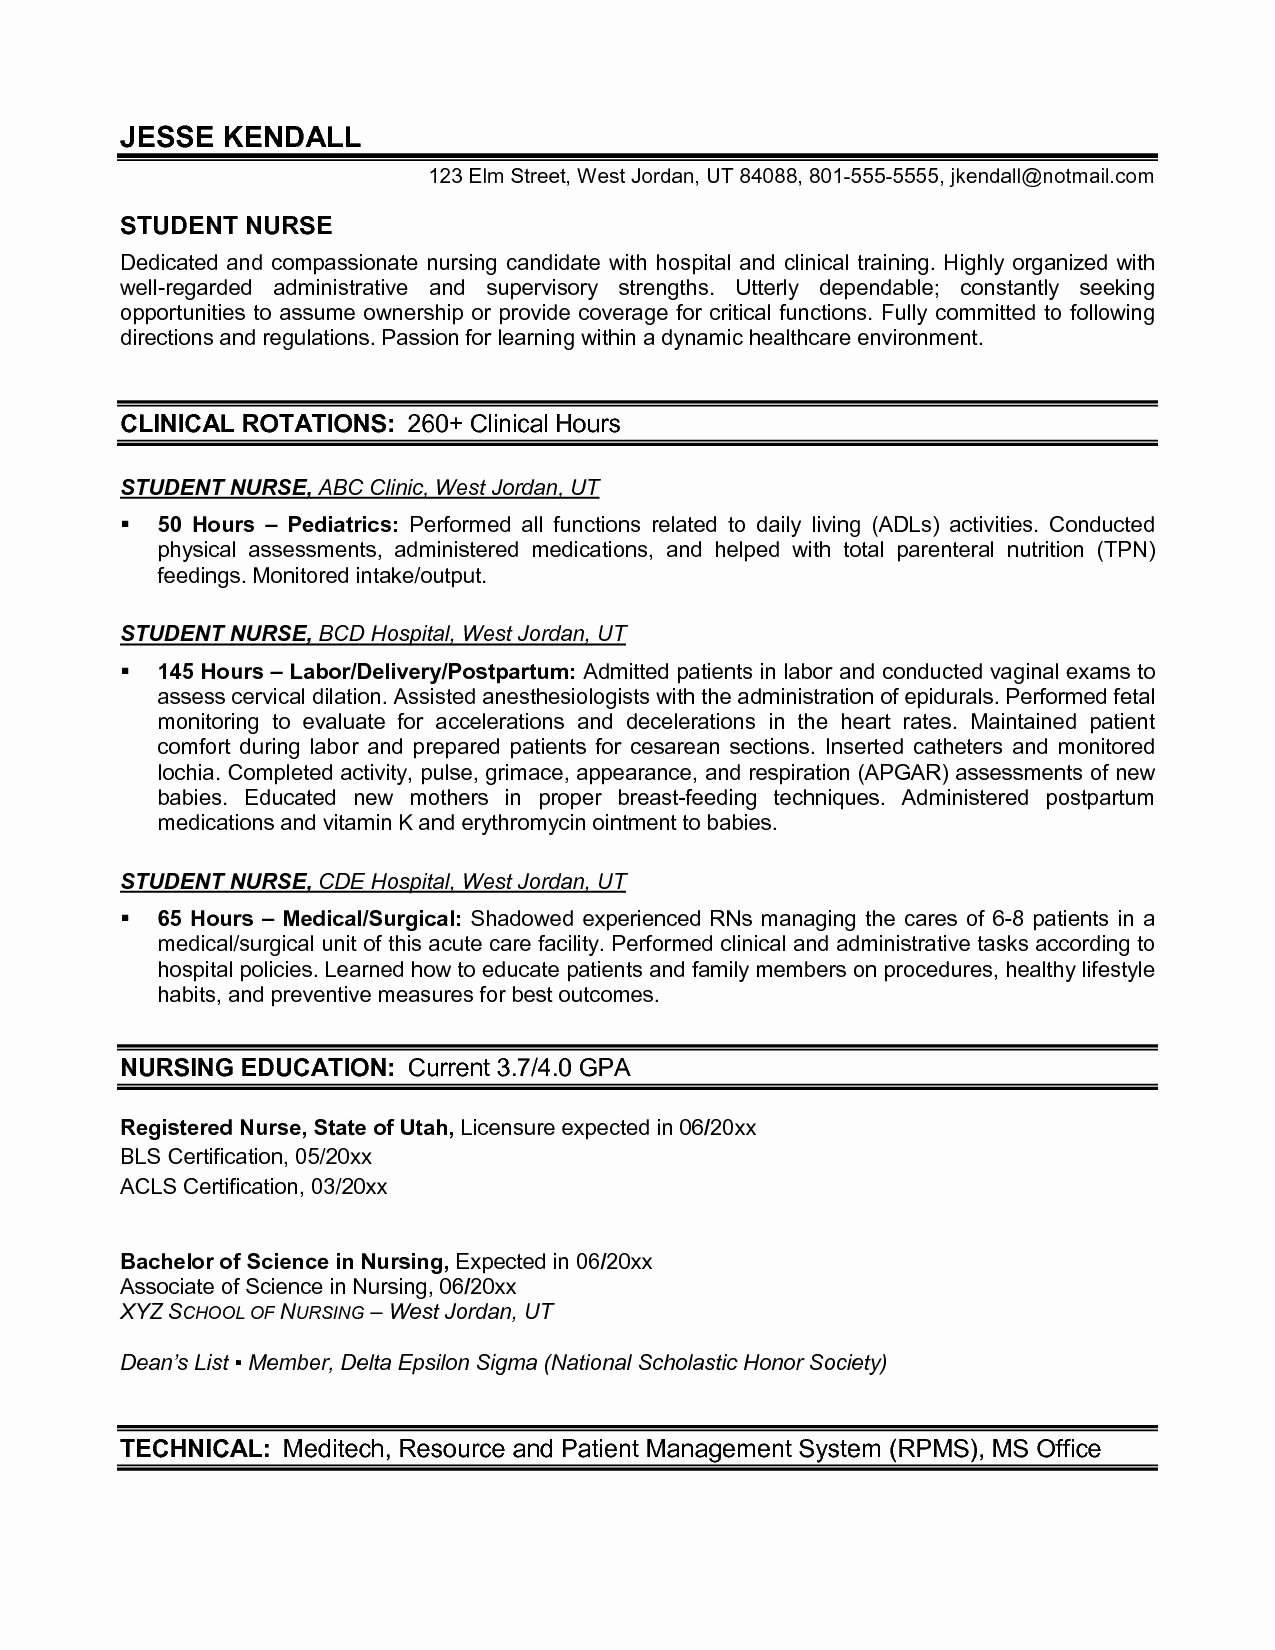 Sample Resume for Fresh Graduate Nurses with No Experience Sample Resume for Graduate Nursing Schol